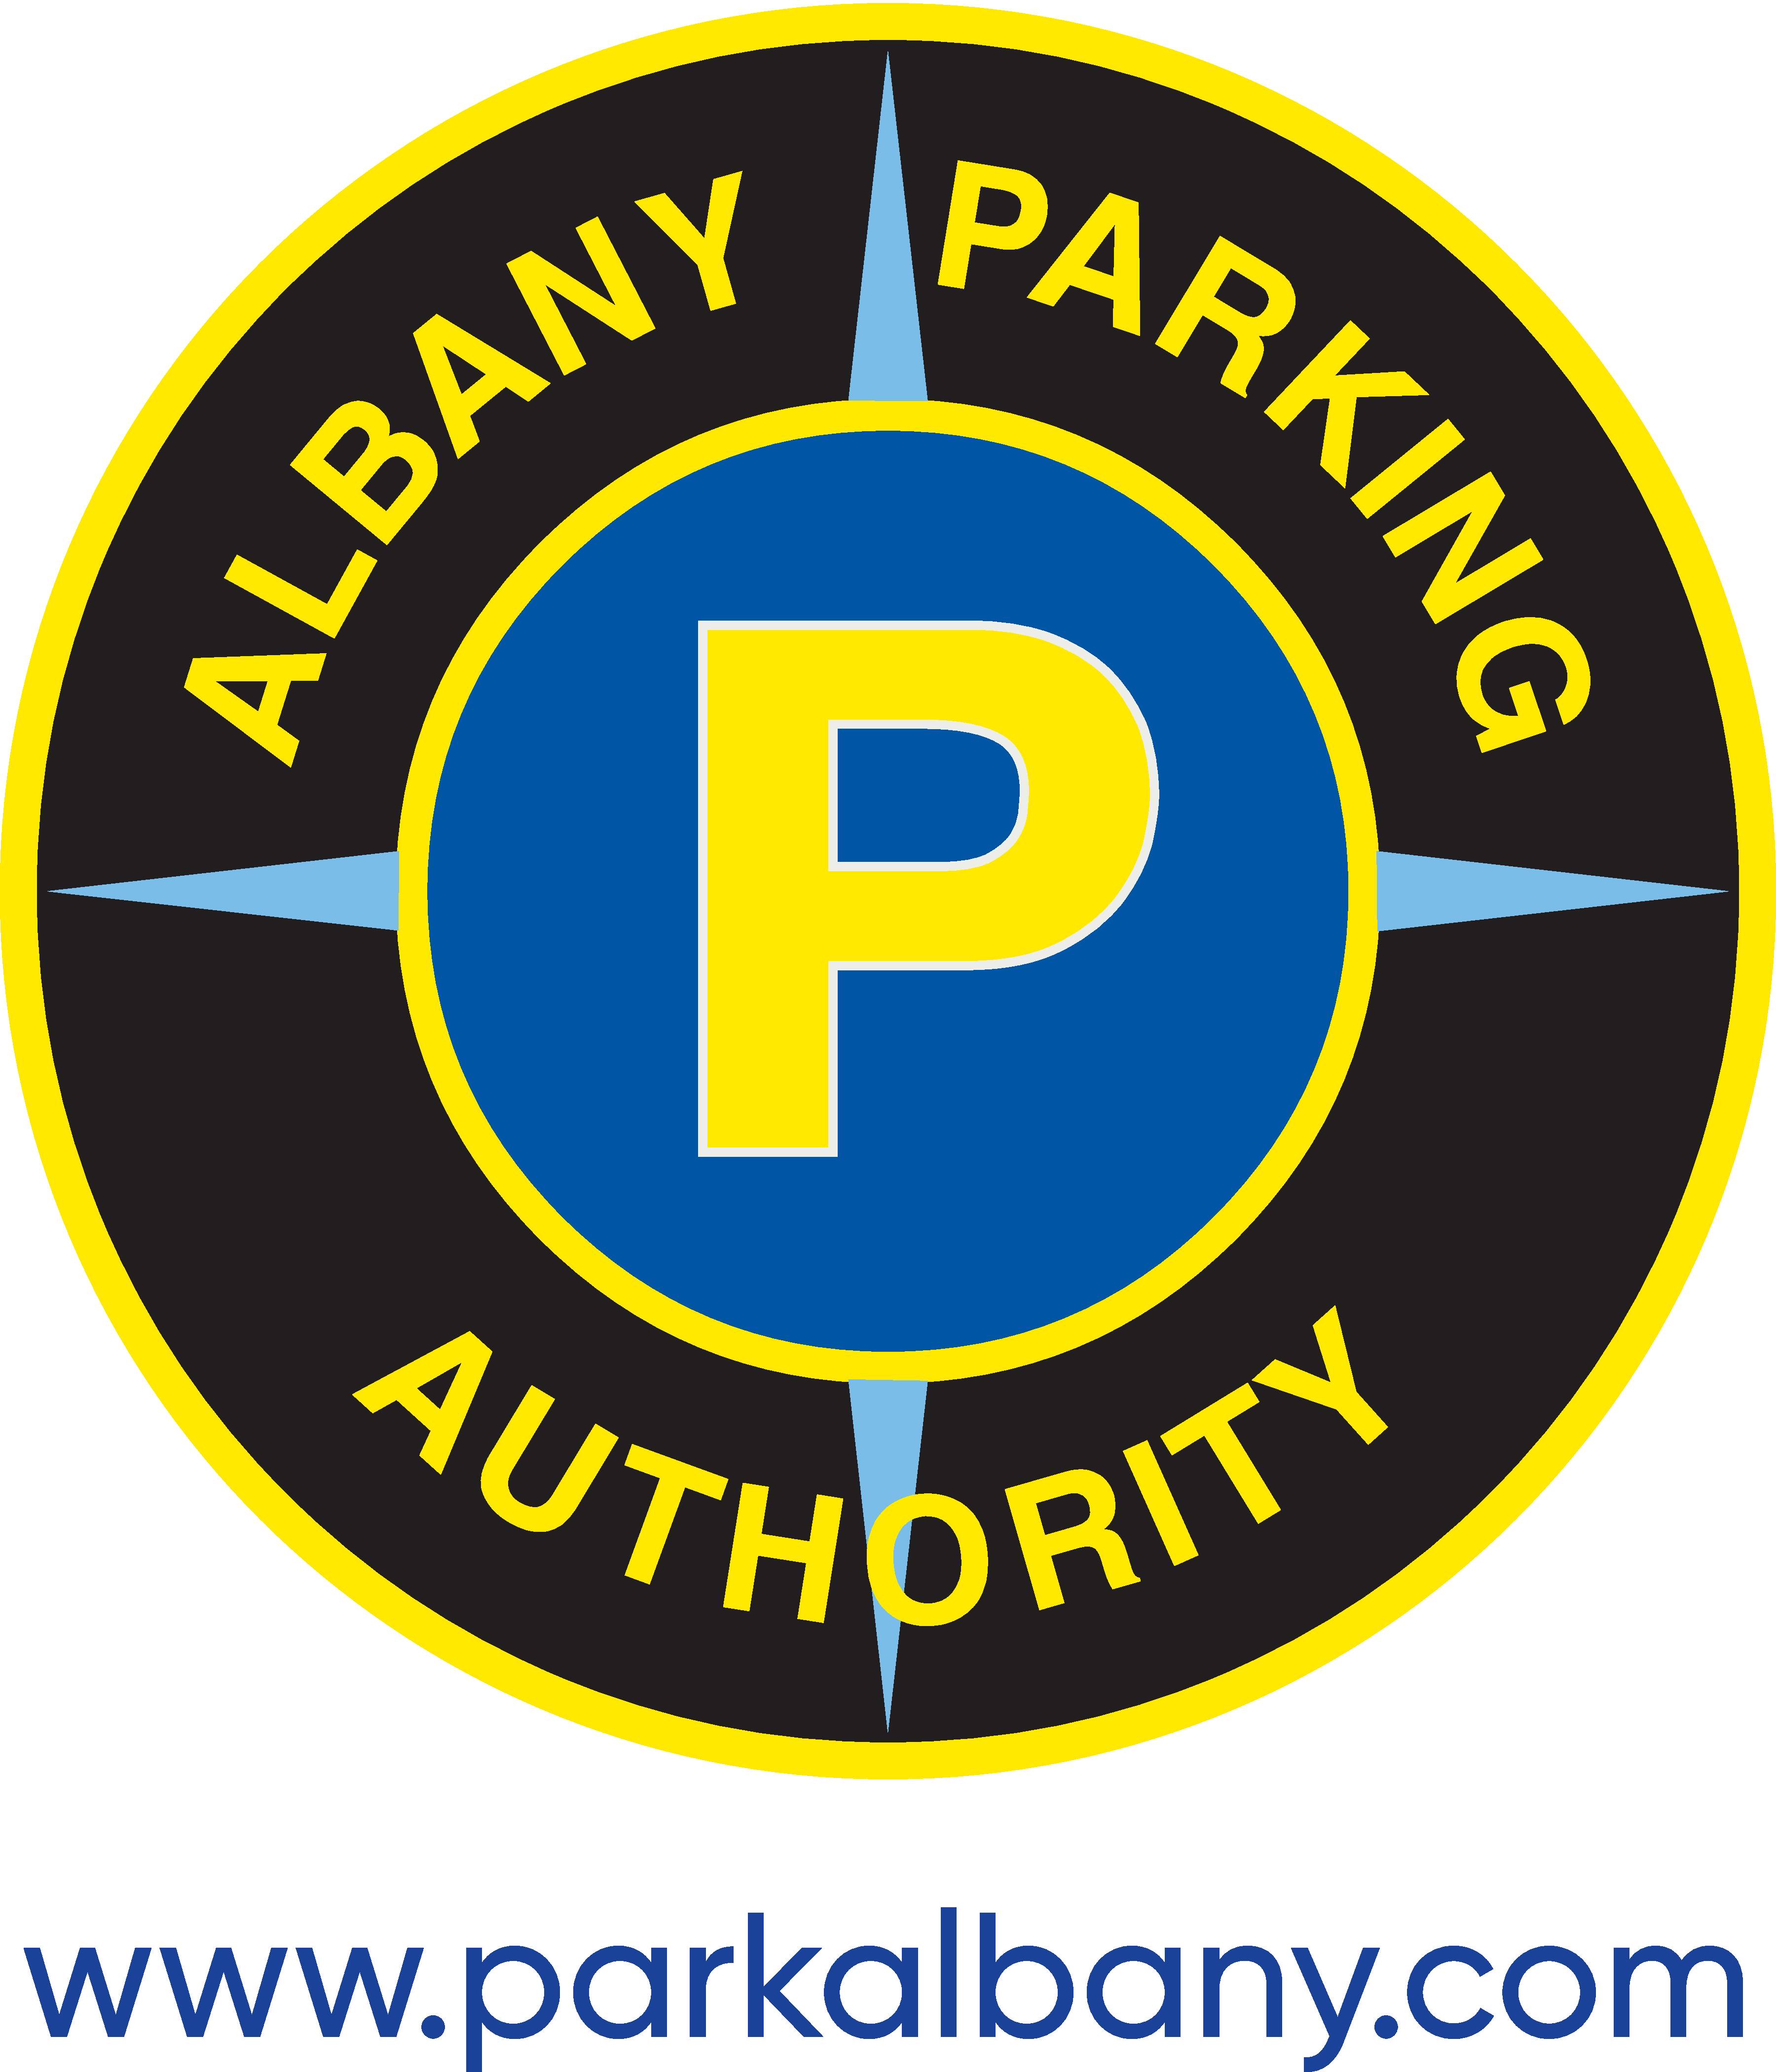 Albany Logo - APA albany parking authority logo - Lark Street (BID) Business ...